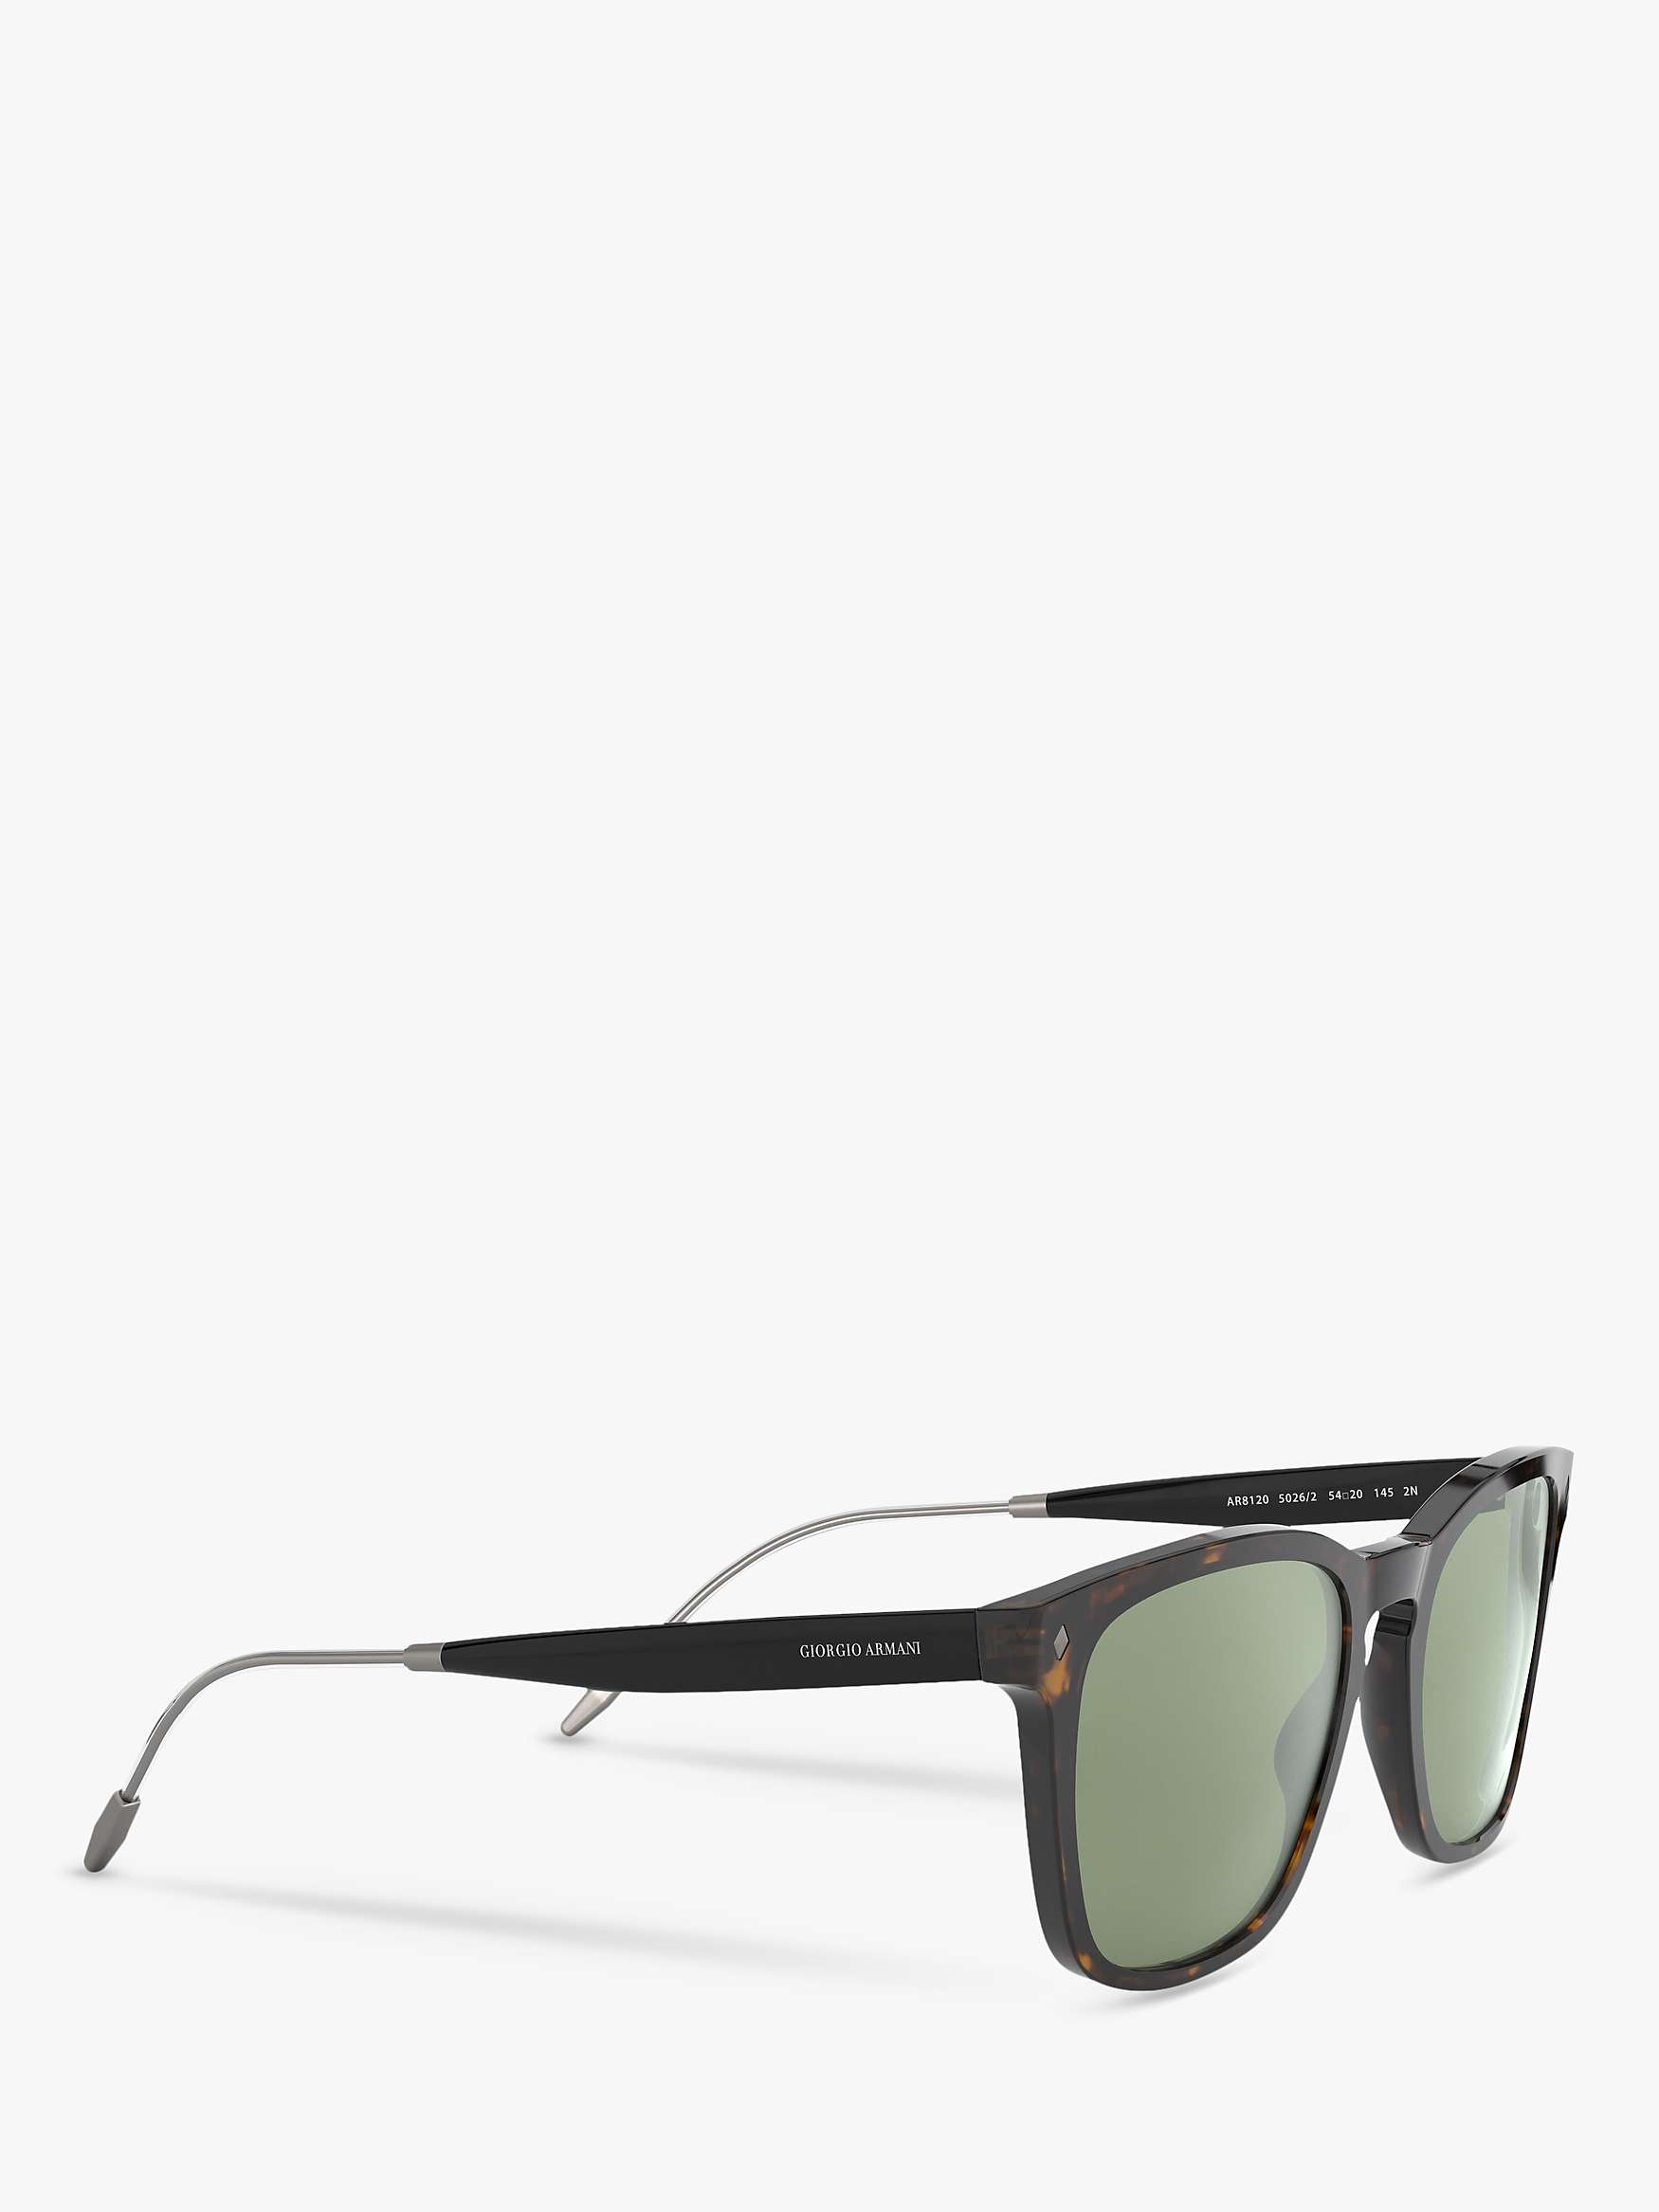 Buy Giorgio Armani AR8120 Men's Square Sunglasses, Tortoise/Green Online at johnlewis.com